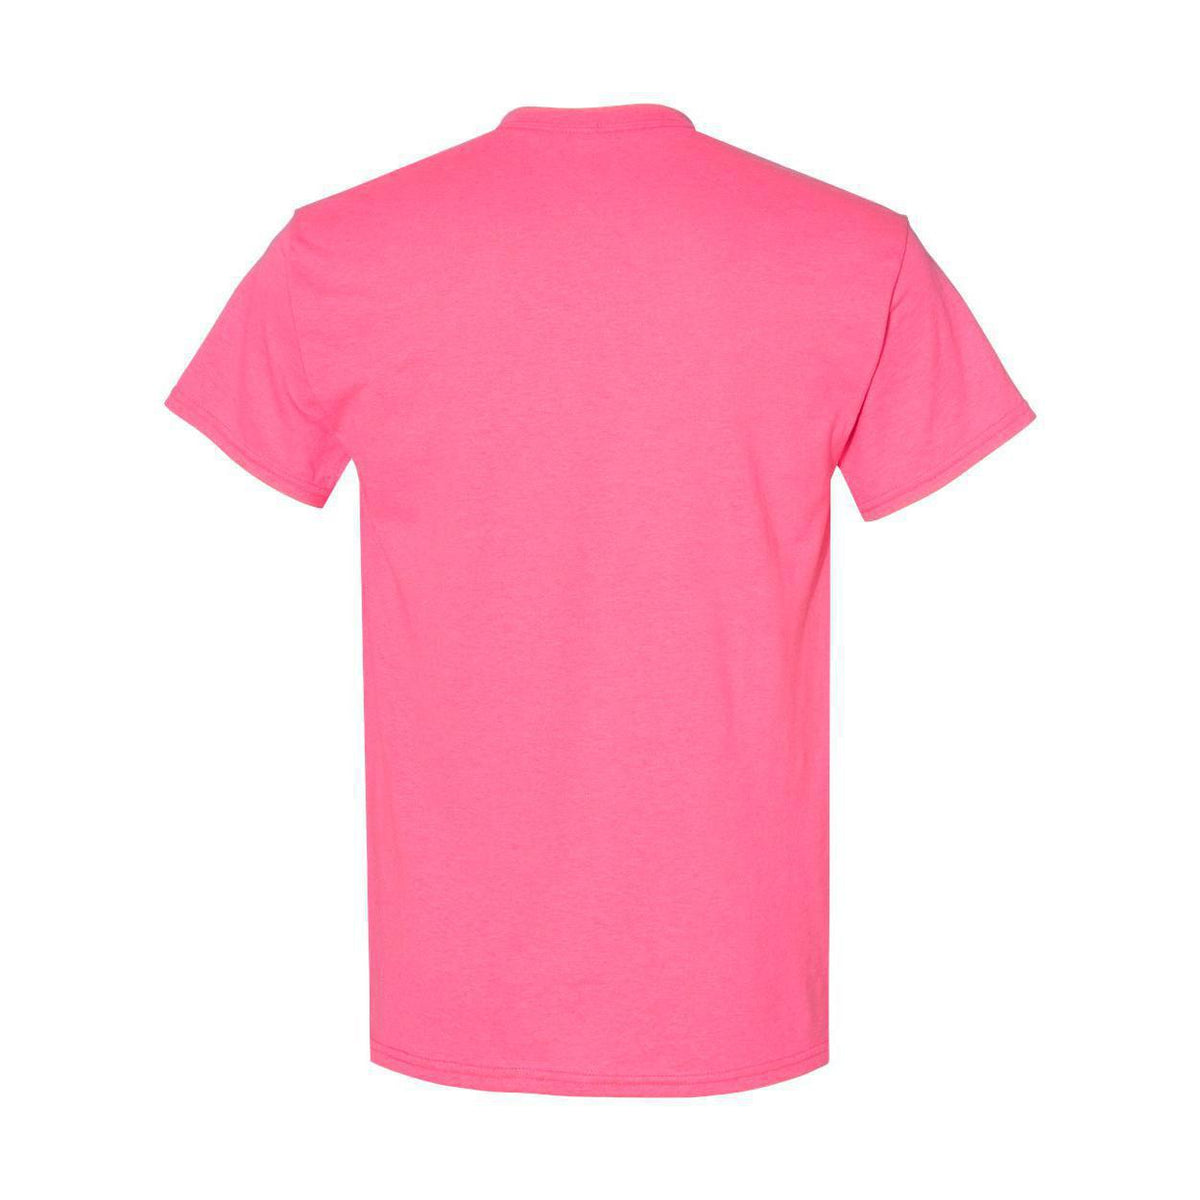  Pink Shirt